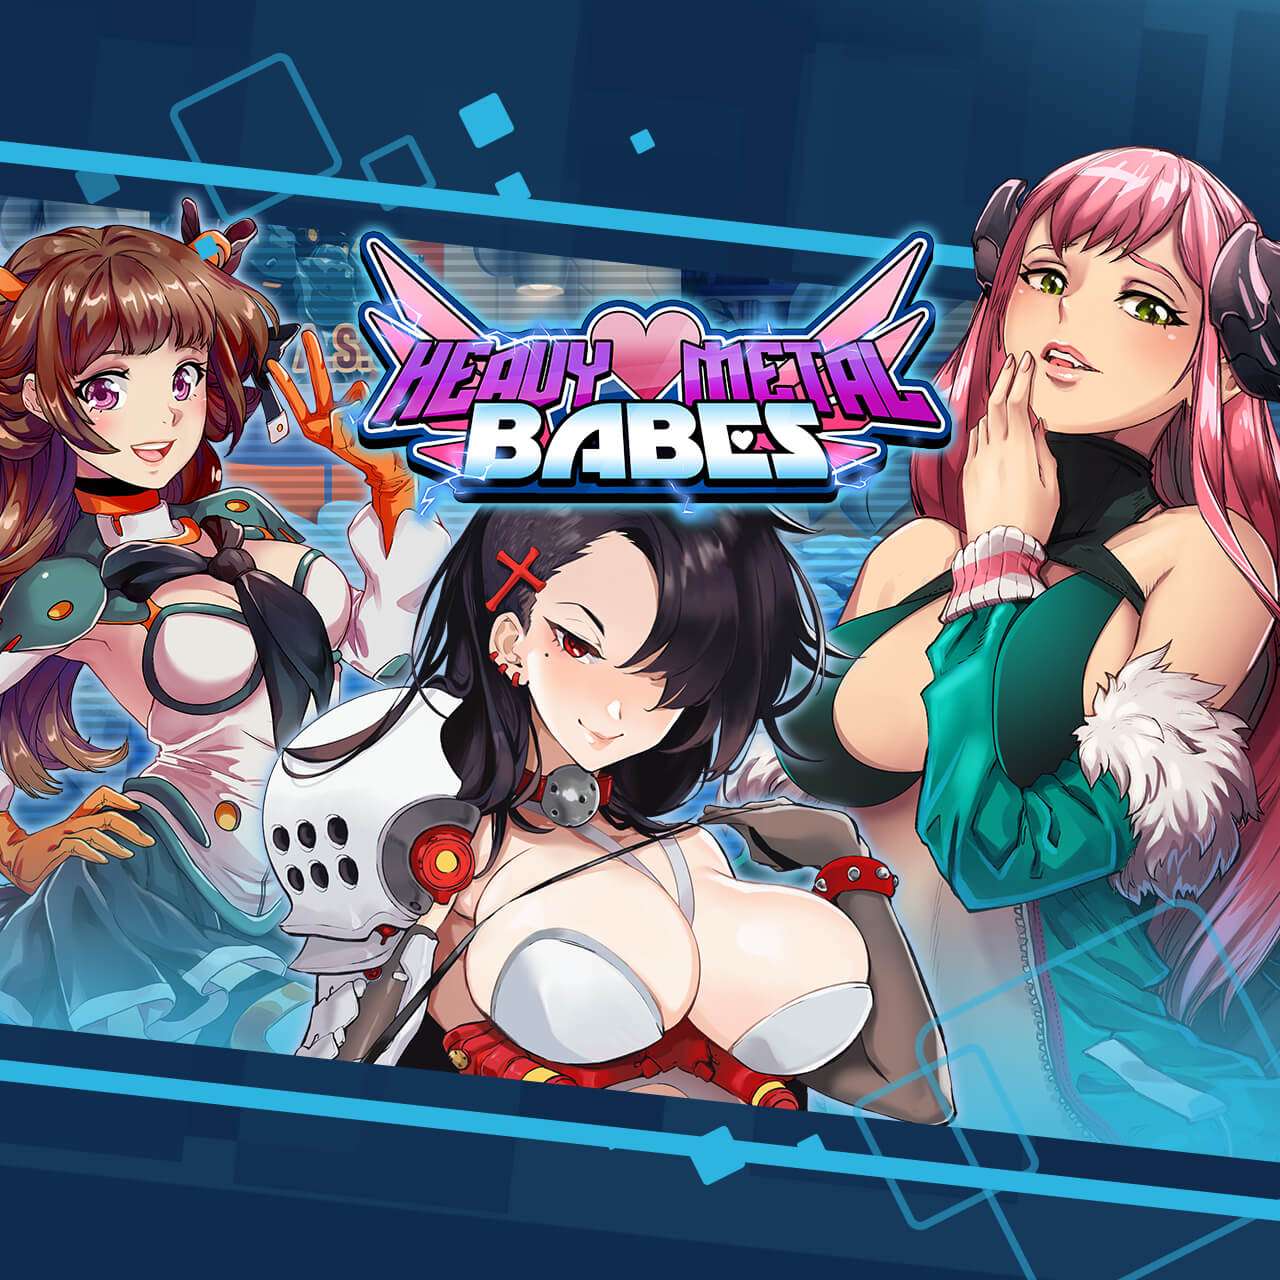 Hot Anime Bases - Heavy Metal Babes - Turn Based RPG Sex Game with APK file | Nutaku